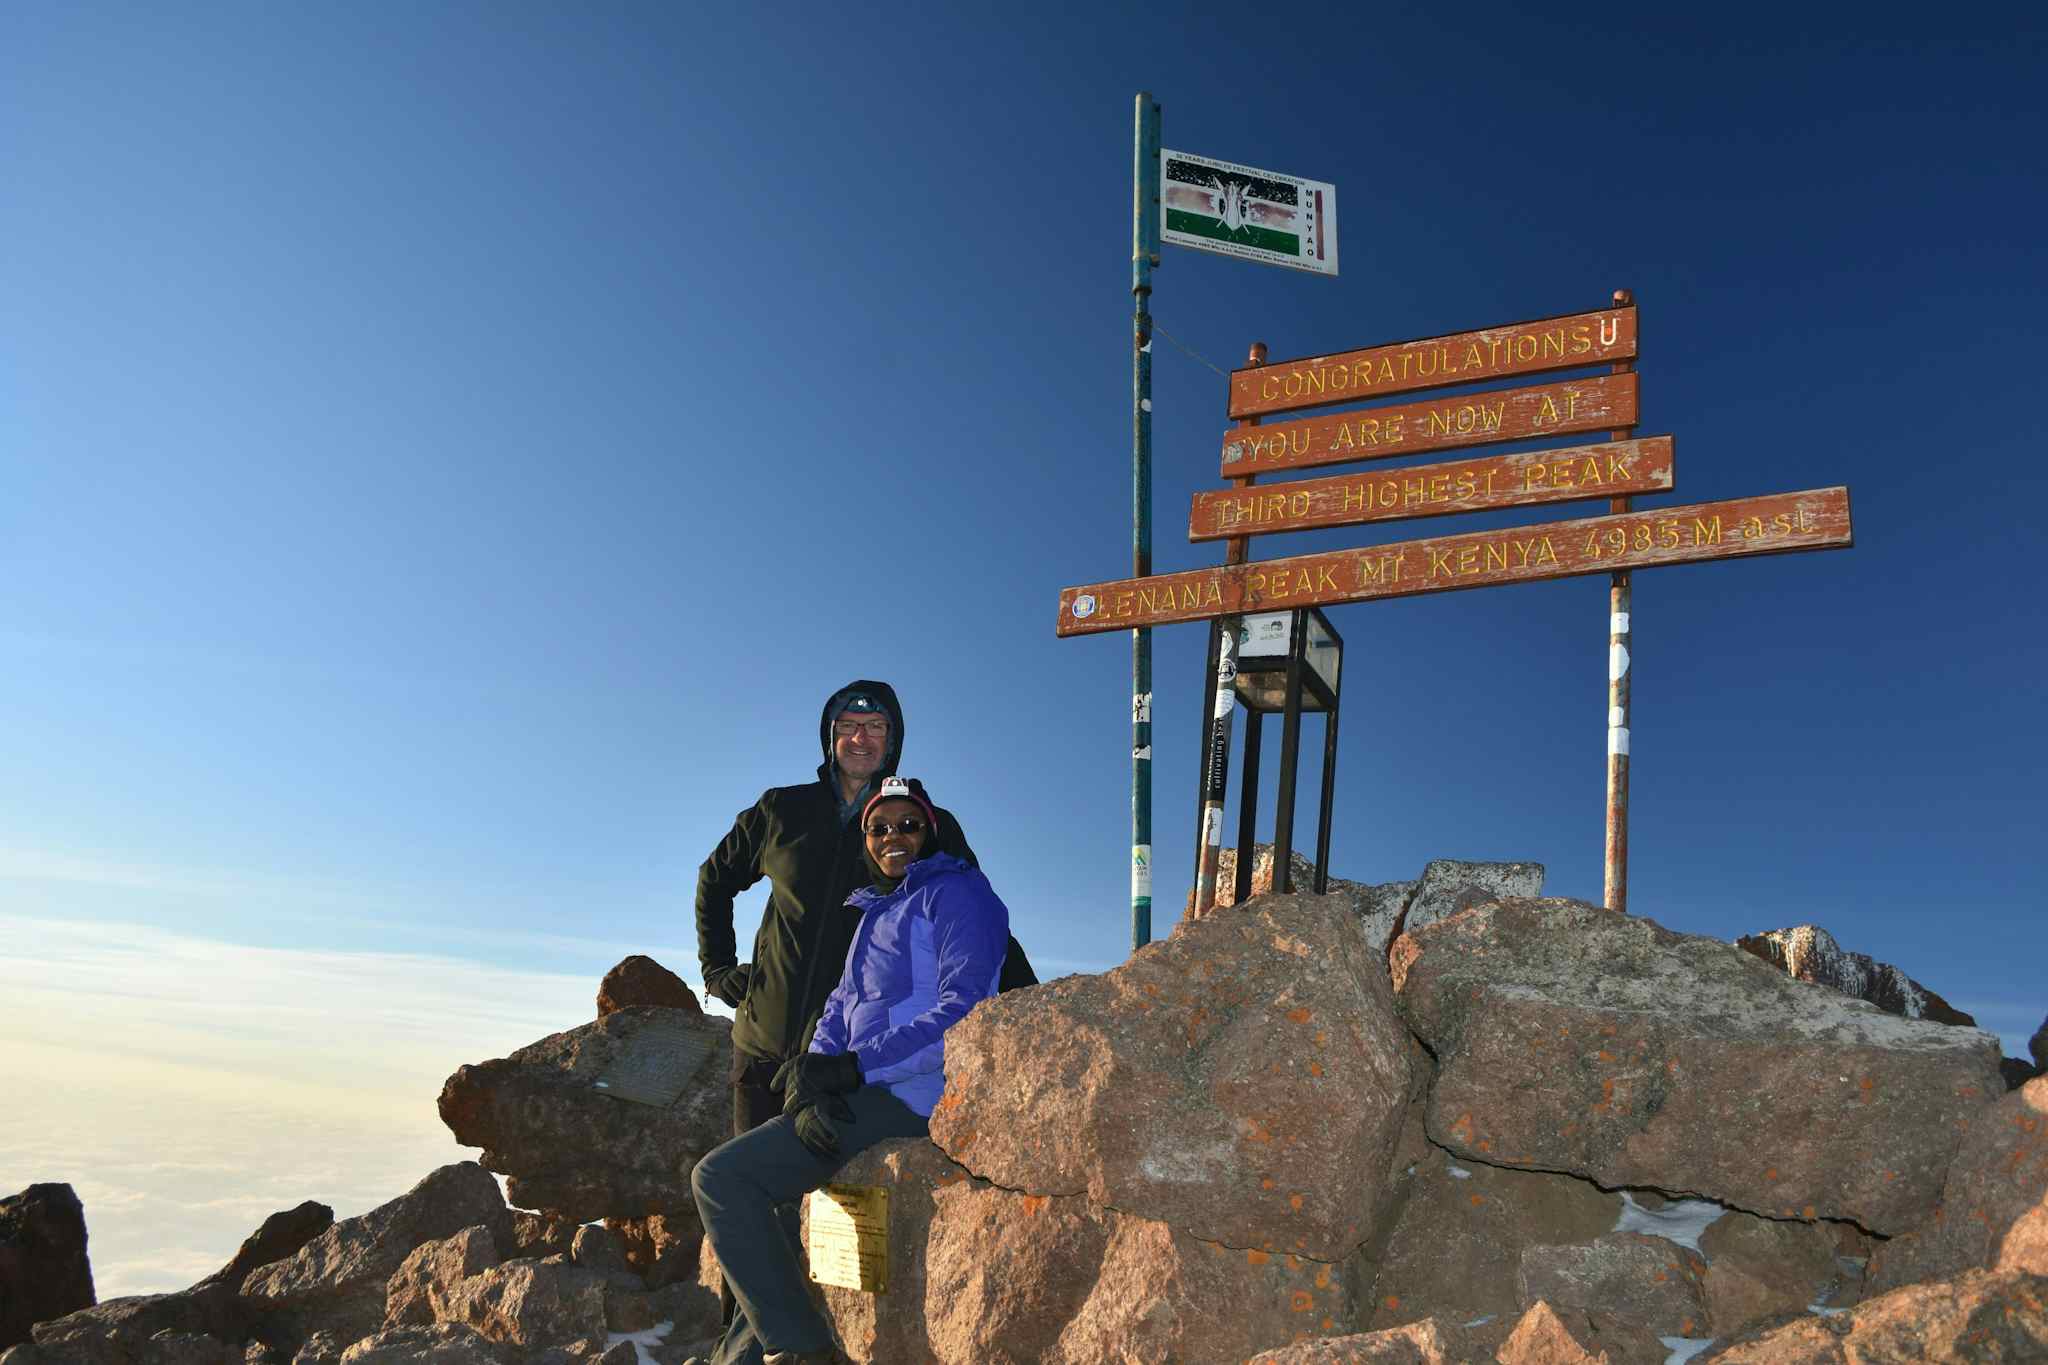 Hikers summit at Point Lenana on Mount Kenya